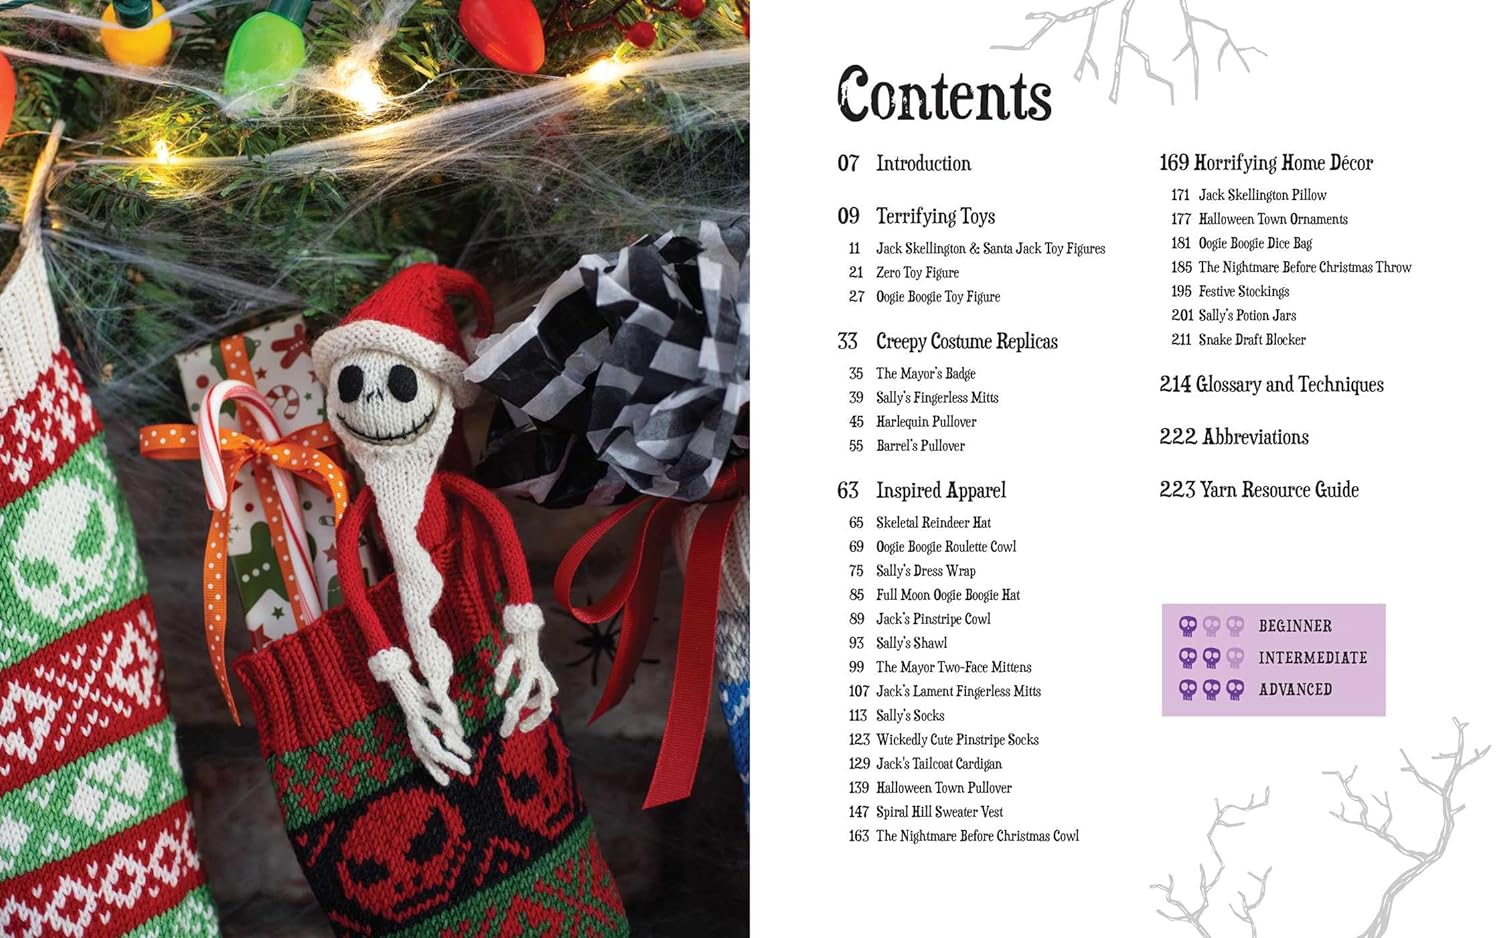 Tim Burton's The Nightmare Before Christmas Knitting Guide.